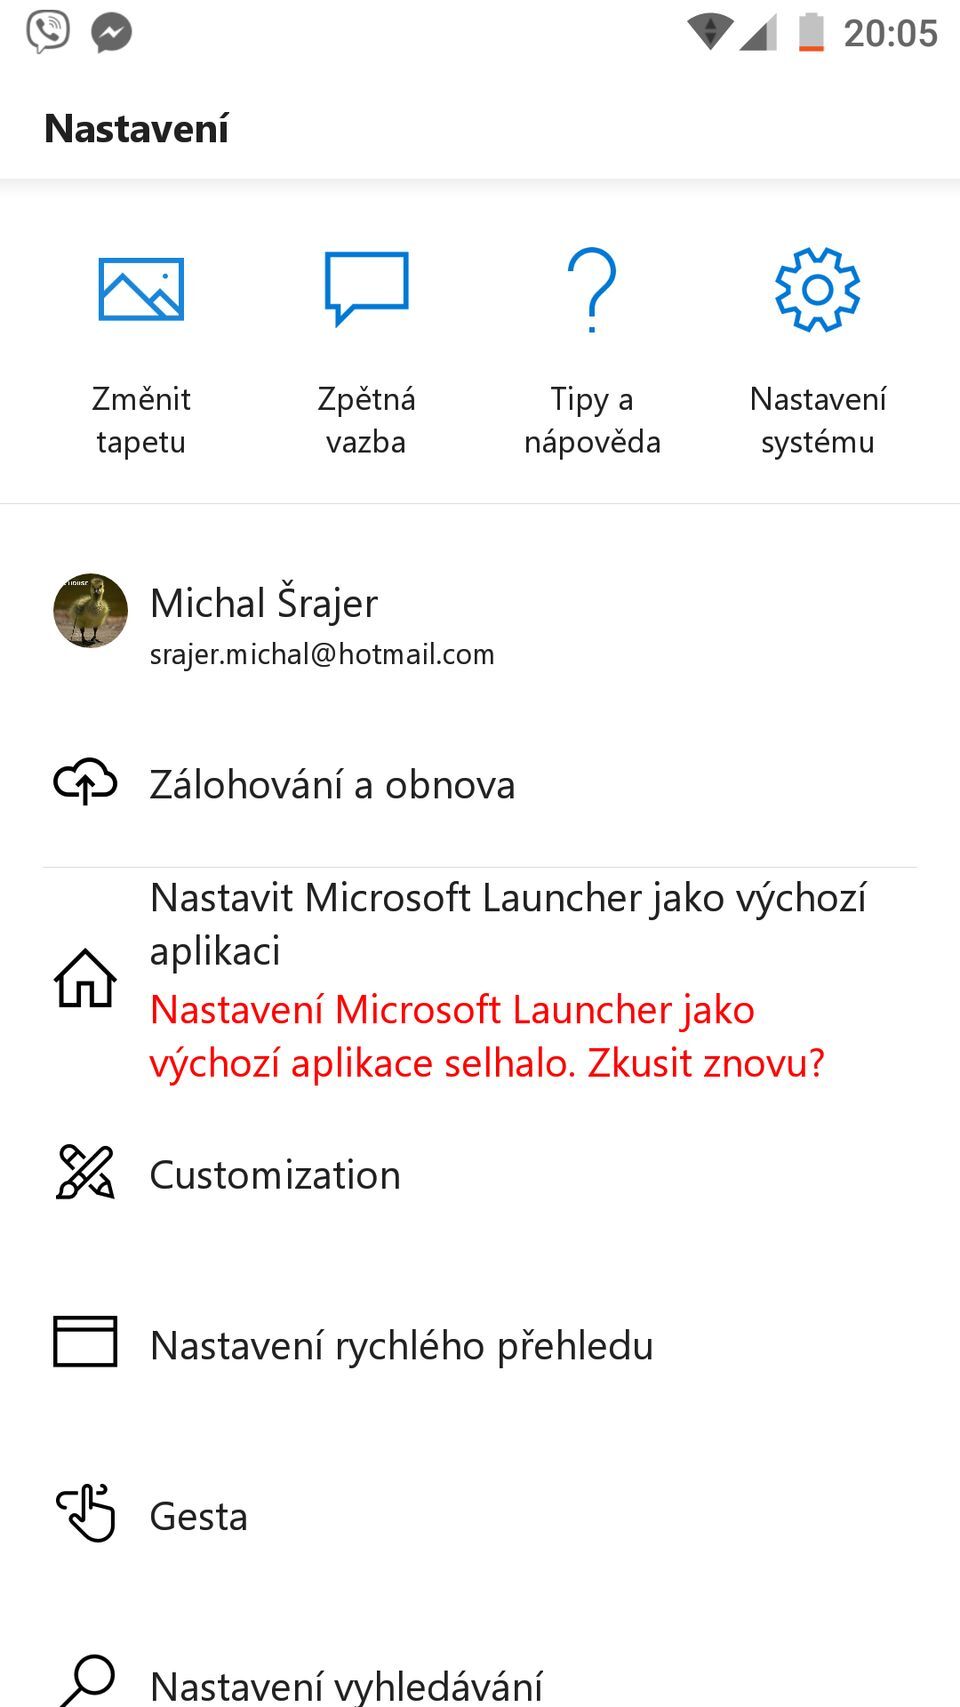 Microsoft Launcher